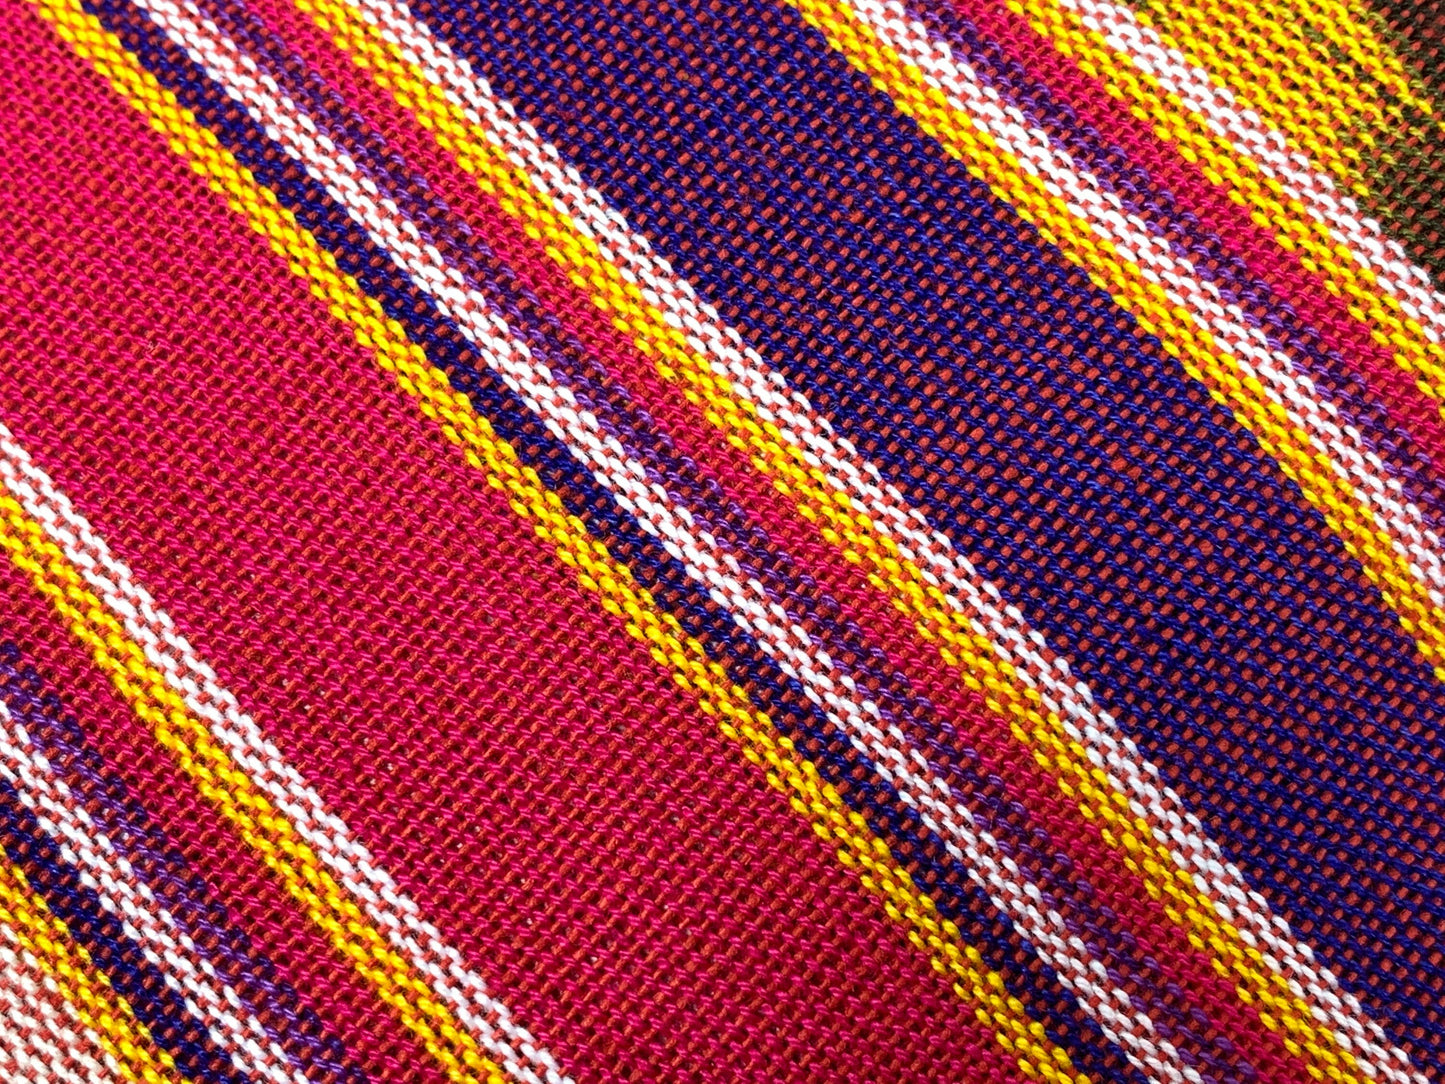 Guatemalan Handwoven Bright Pink, Purple, Gold Ikat